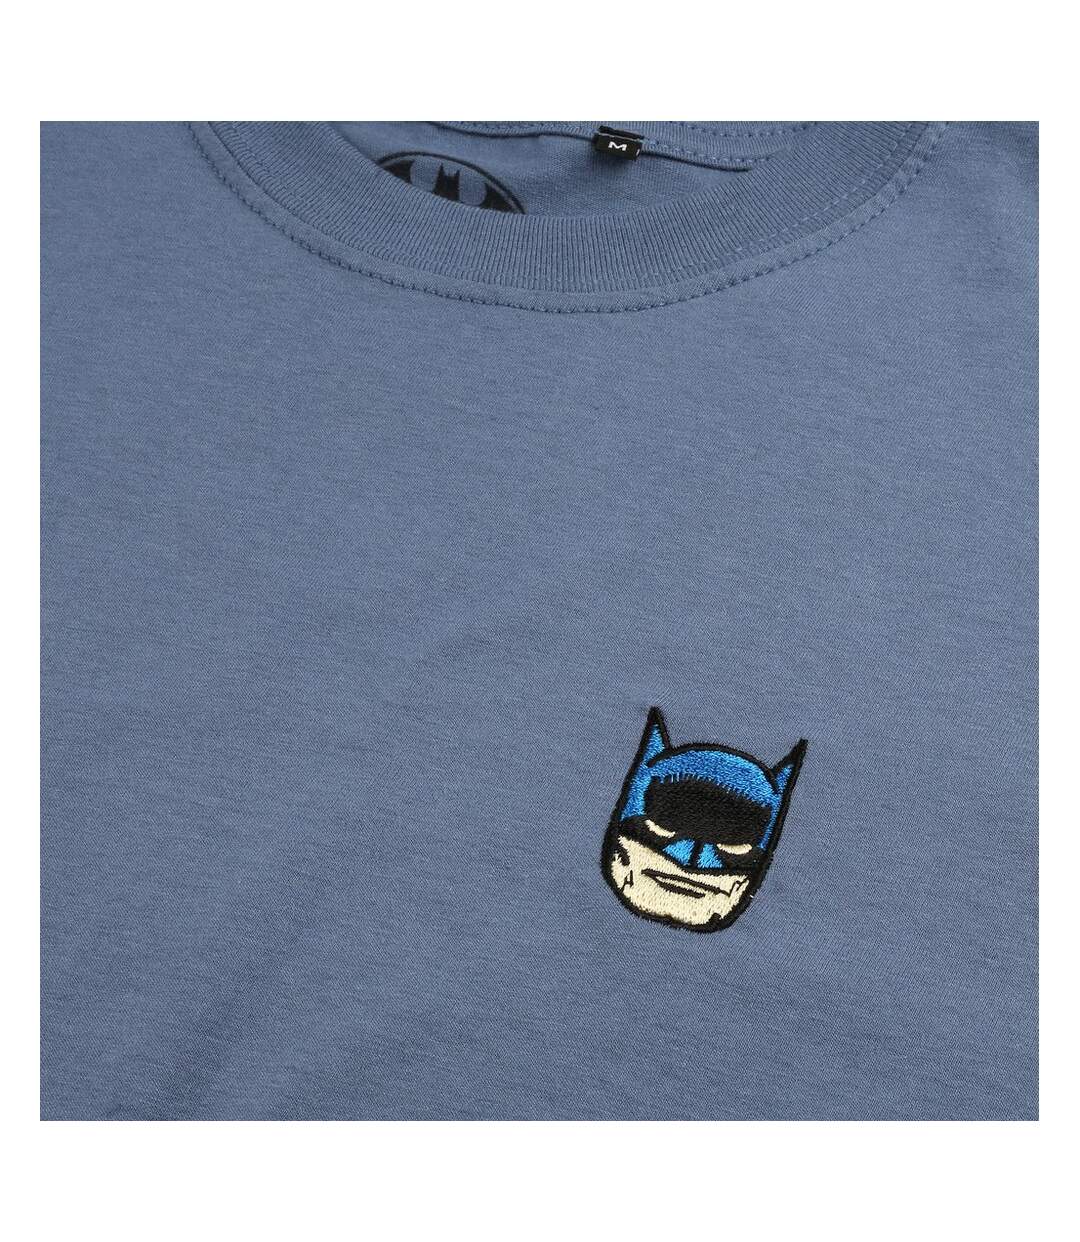 Batman - T-shirt - Homme (Indigo) - UTTV814